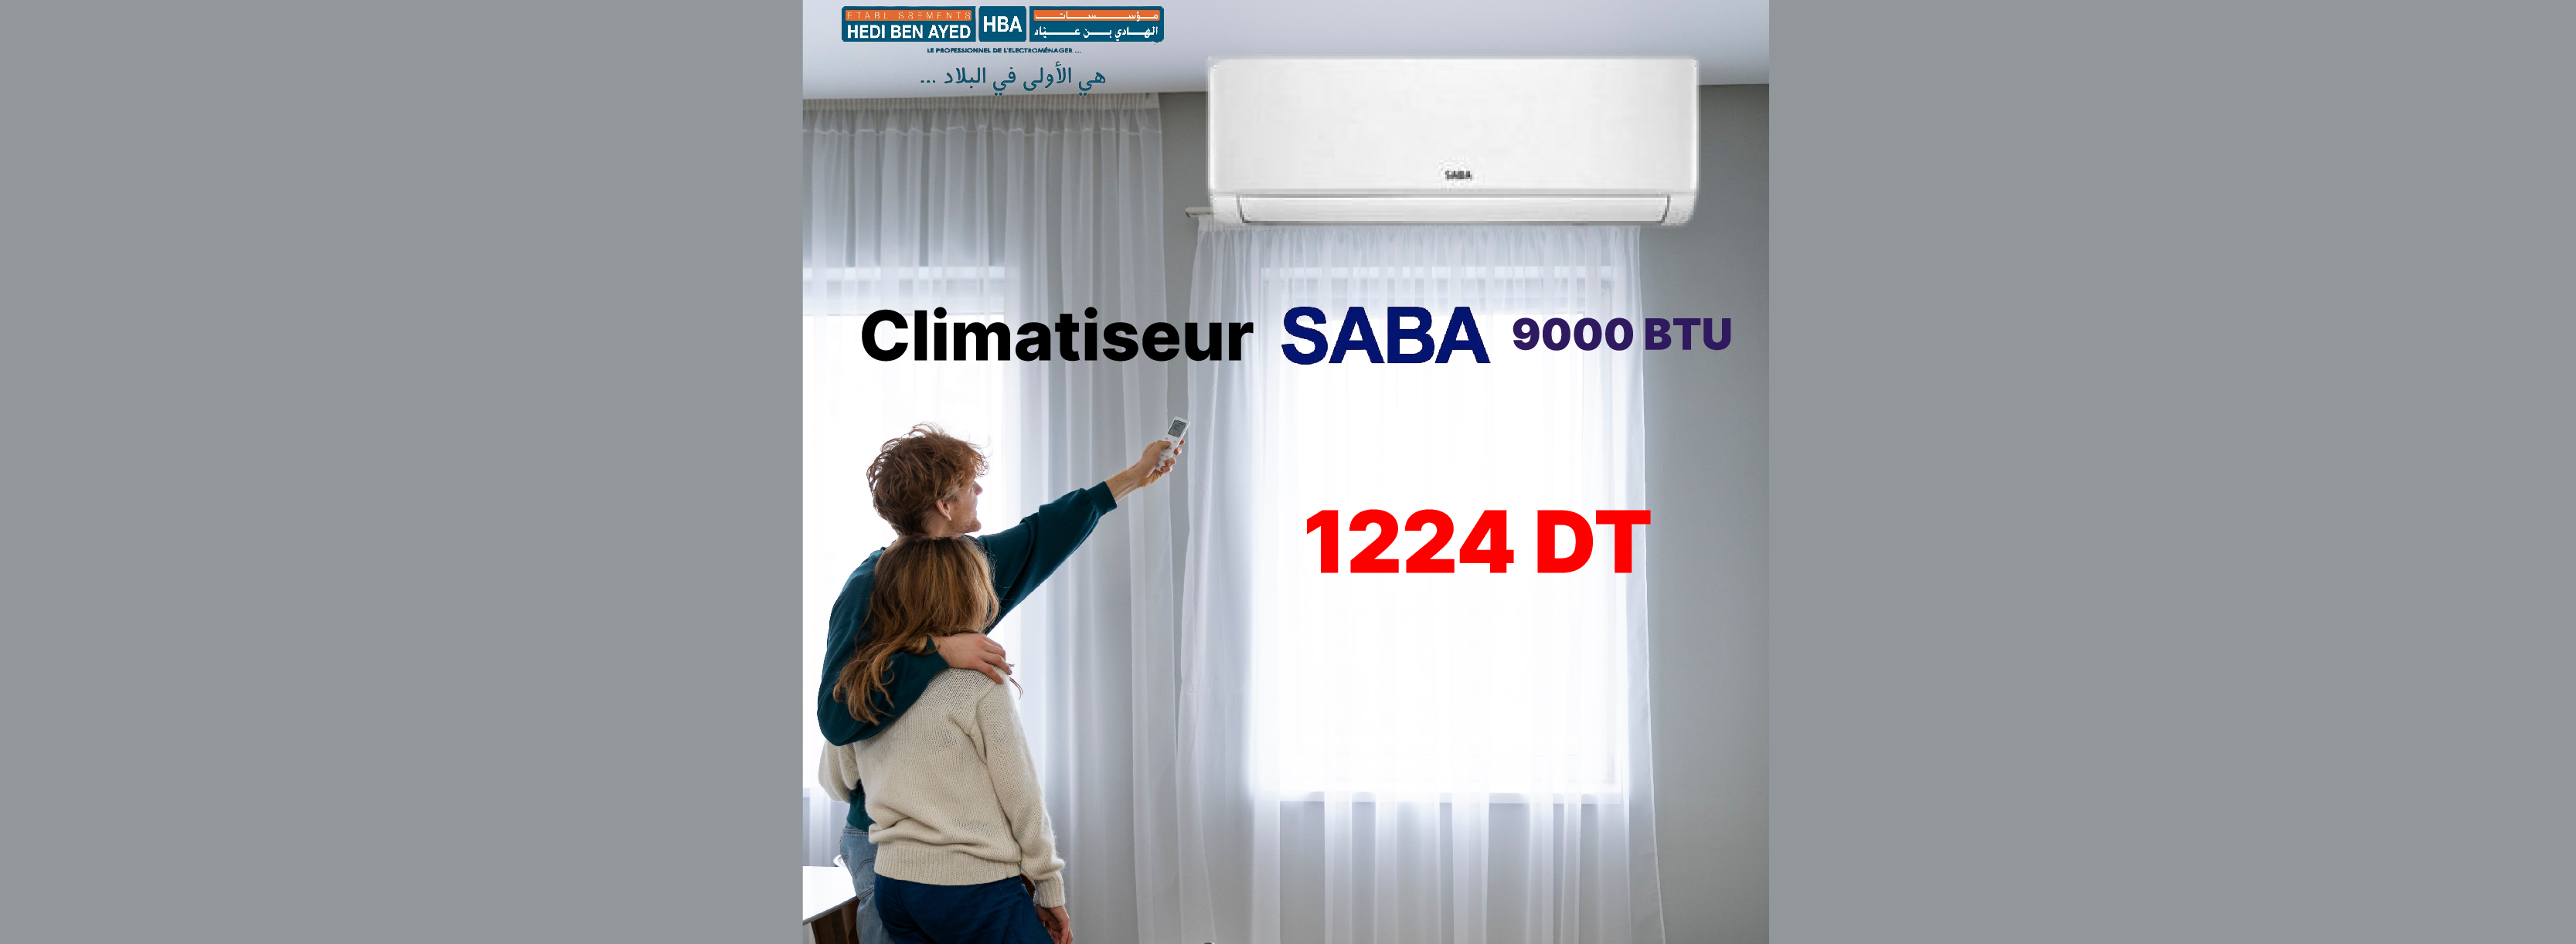 Climatiseur SABA 9000 UBT